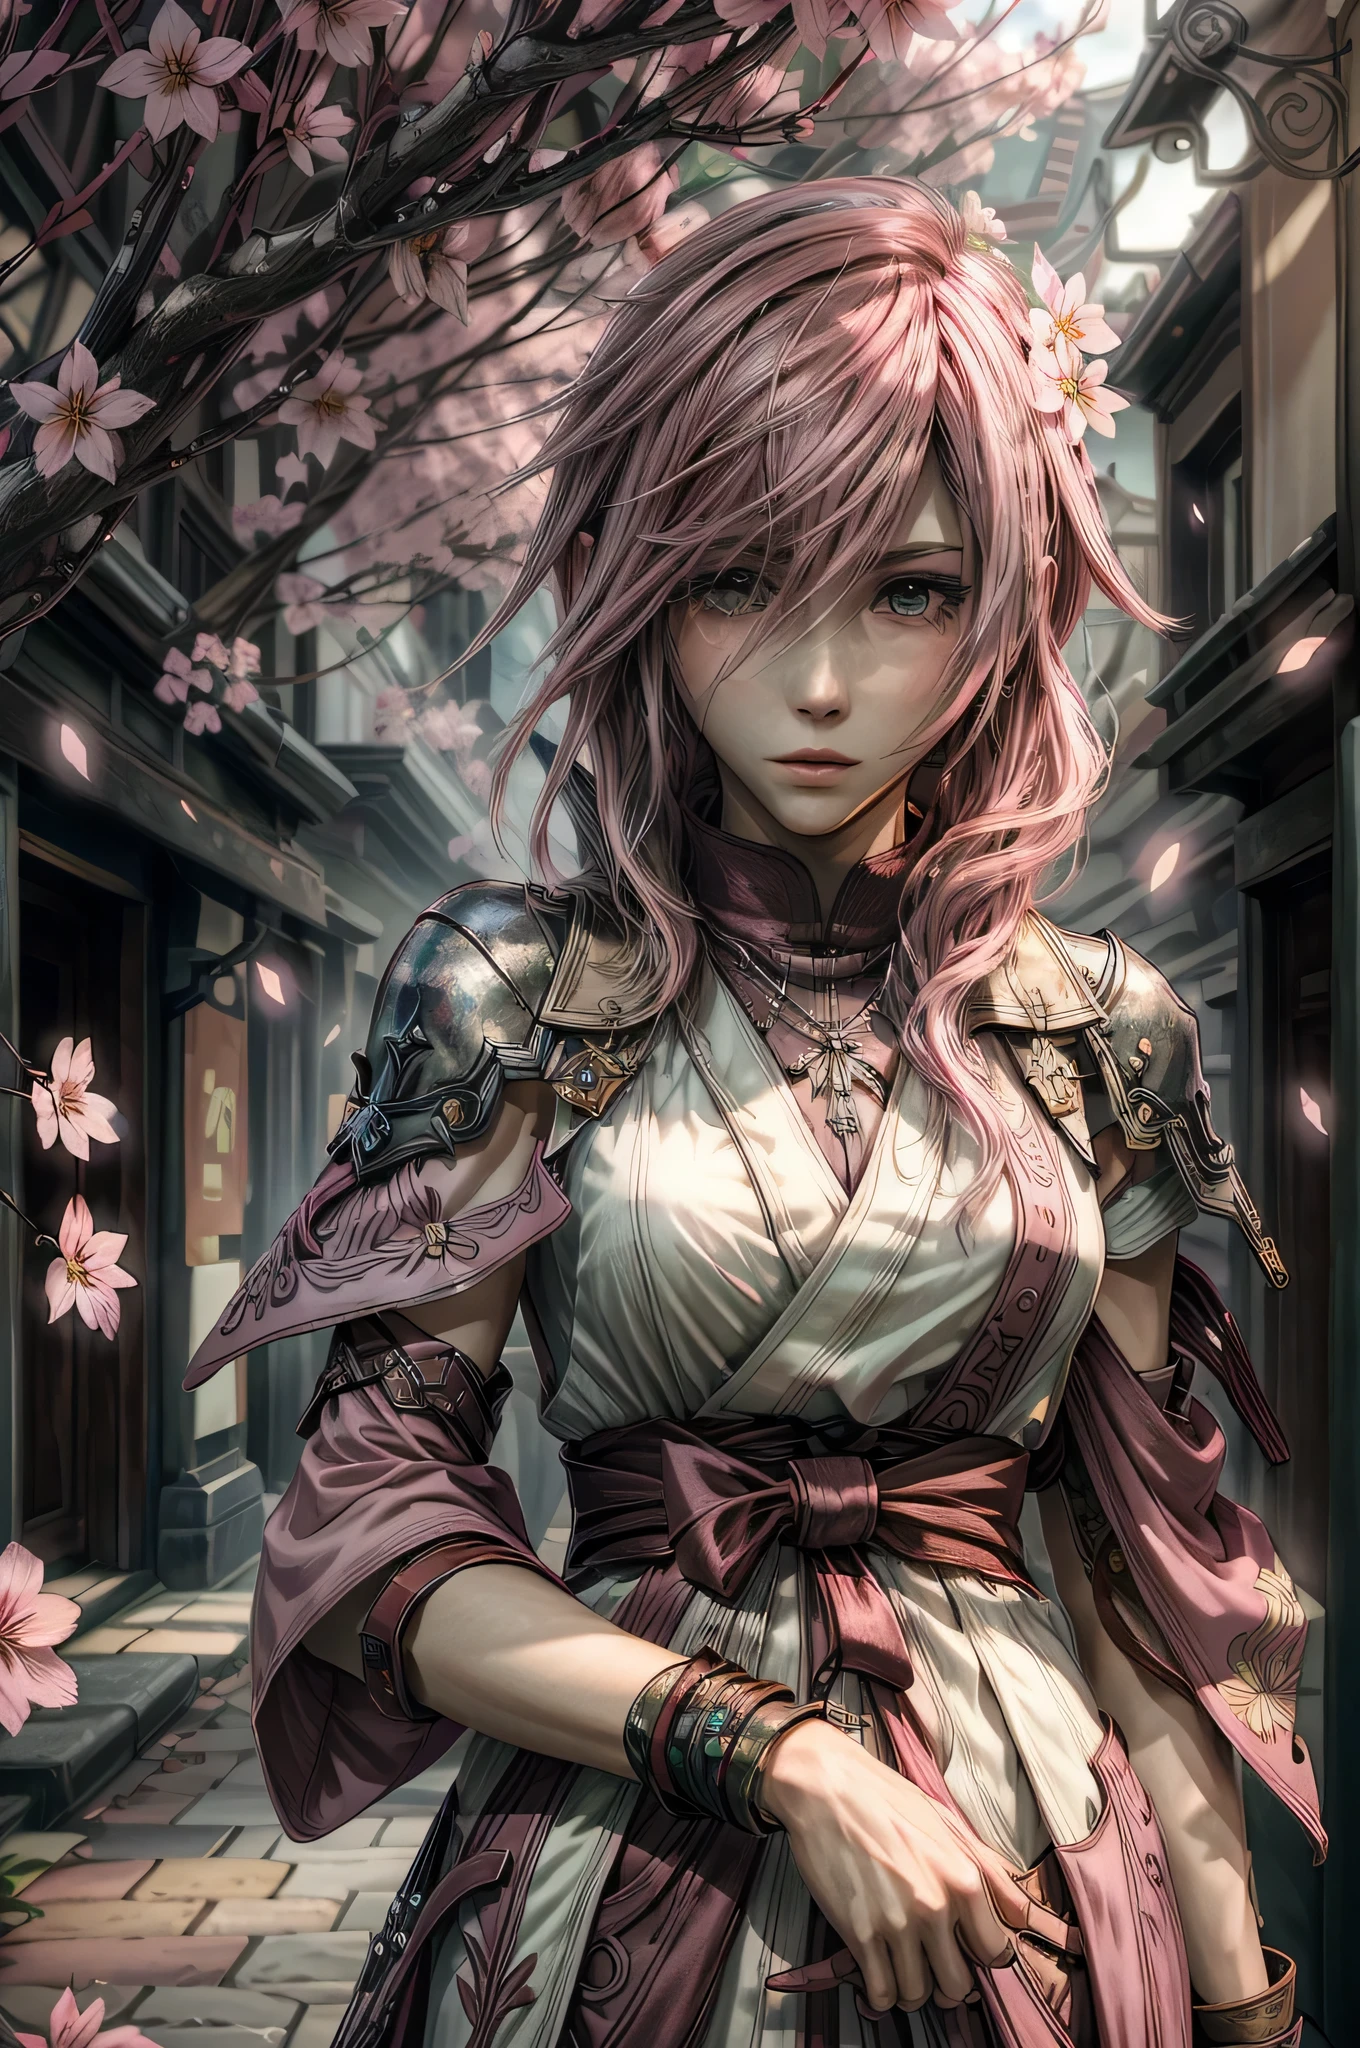 (masterpiece, highest quality:1.3)
Lightning FF13,  1 girl, alone, pink hair, Yukata, Japan, cherry blossoms, hair ornaments